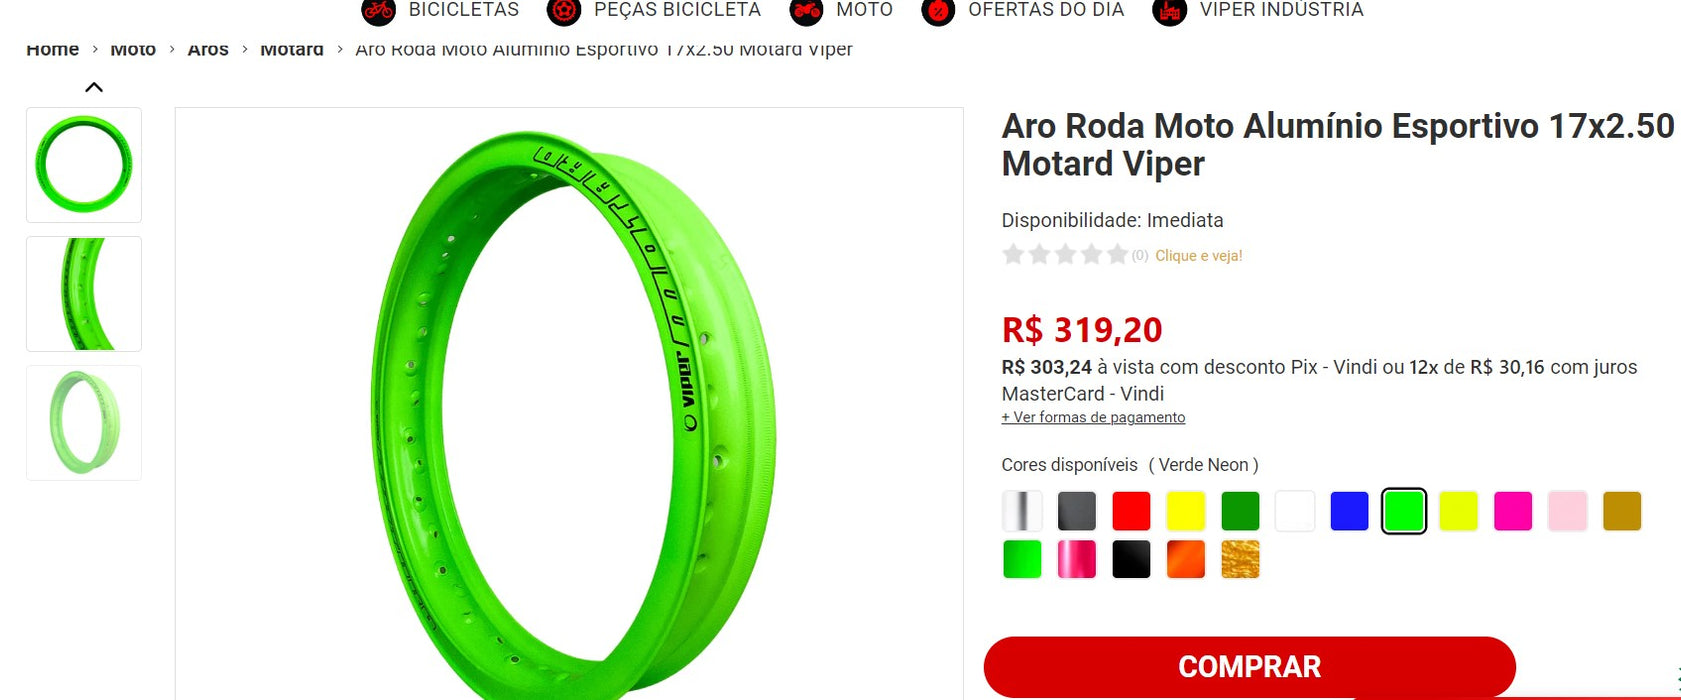 Personal Shopper | Buy from Brazil -Kit Aro Roda Moto Alumínio Esportivo - 2 items (DDP) MKPBR - Brazilian Brands Worldwide